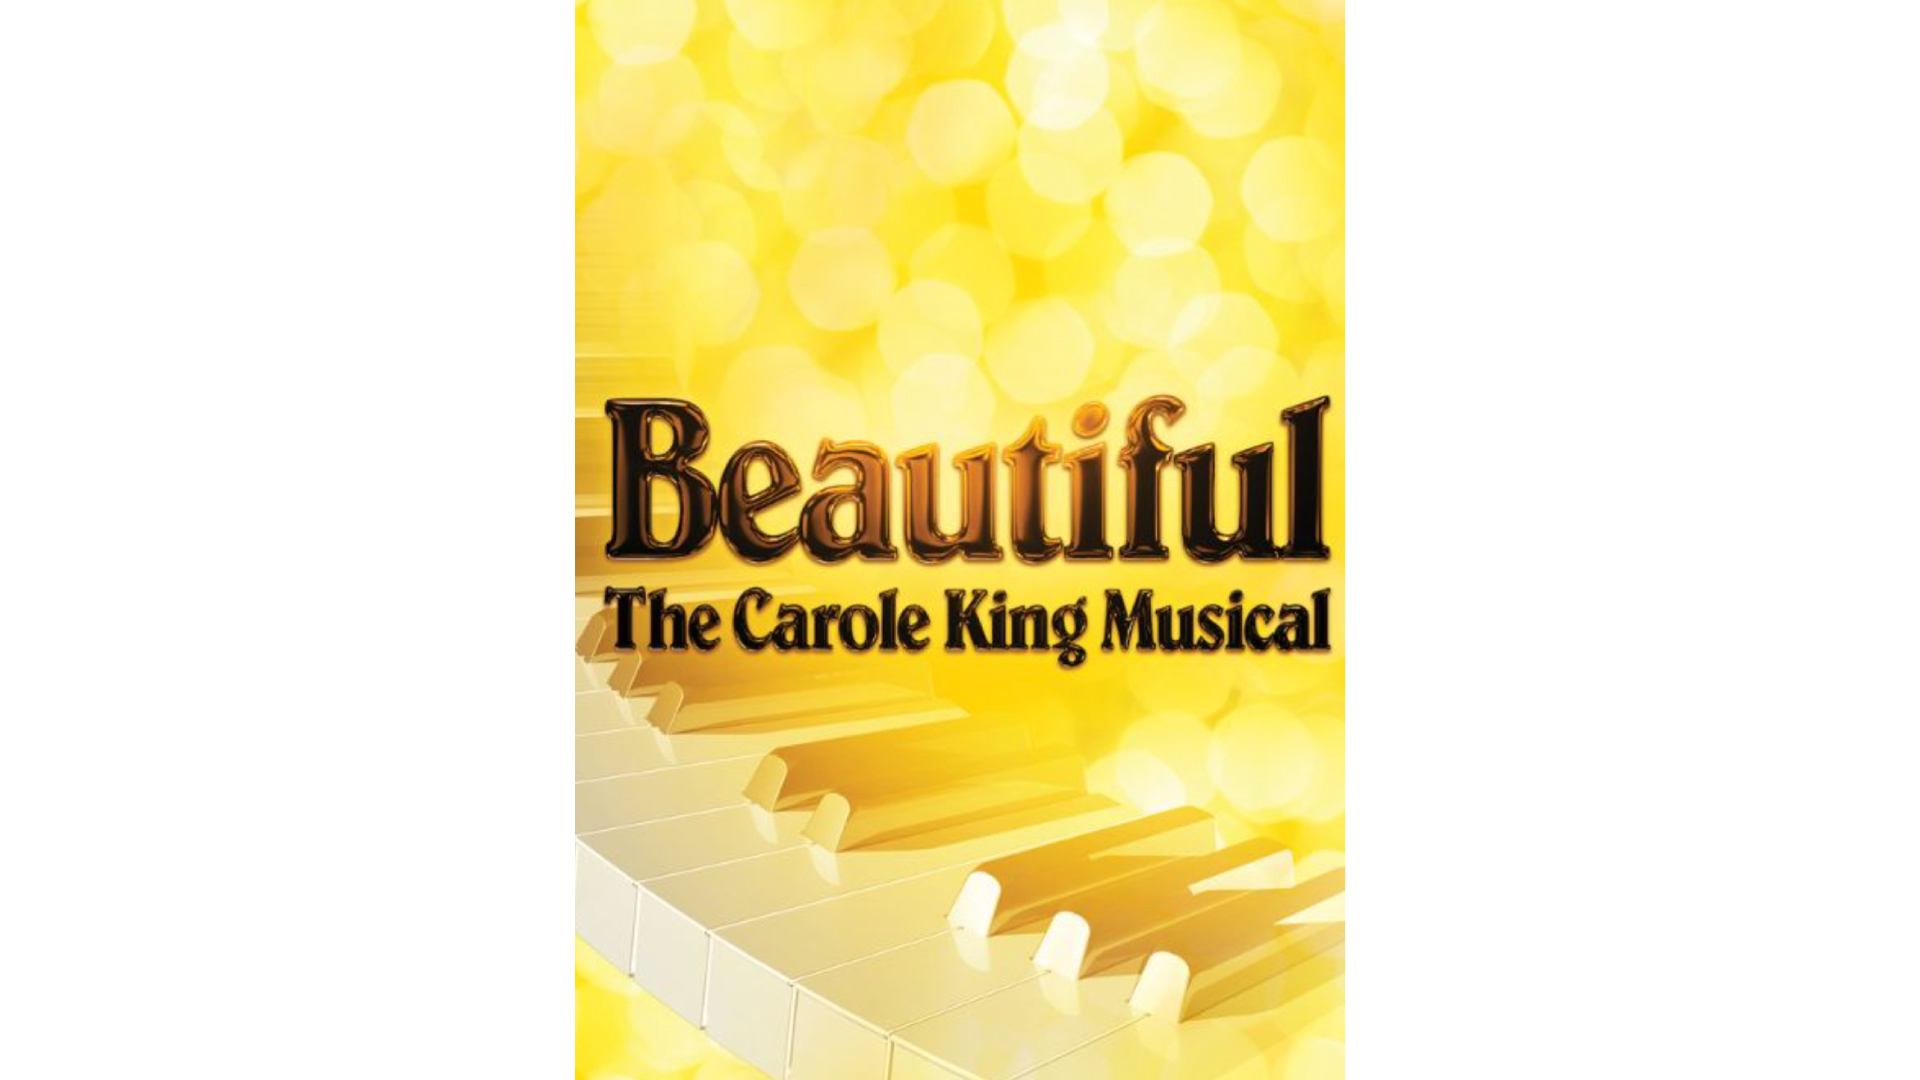 The Carole King Musical, BEAUTIFUL